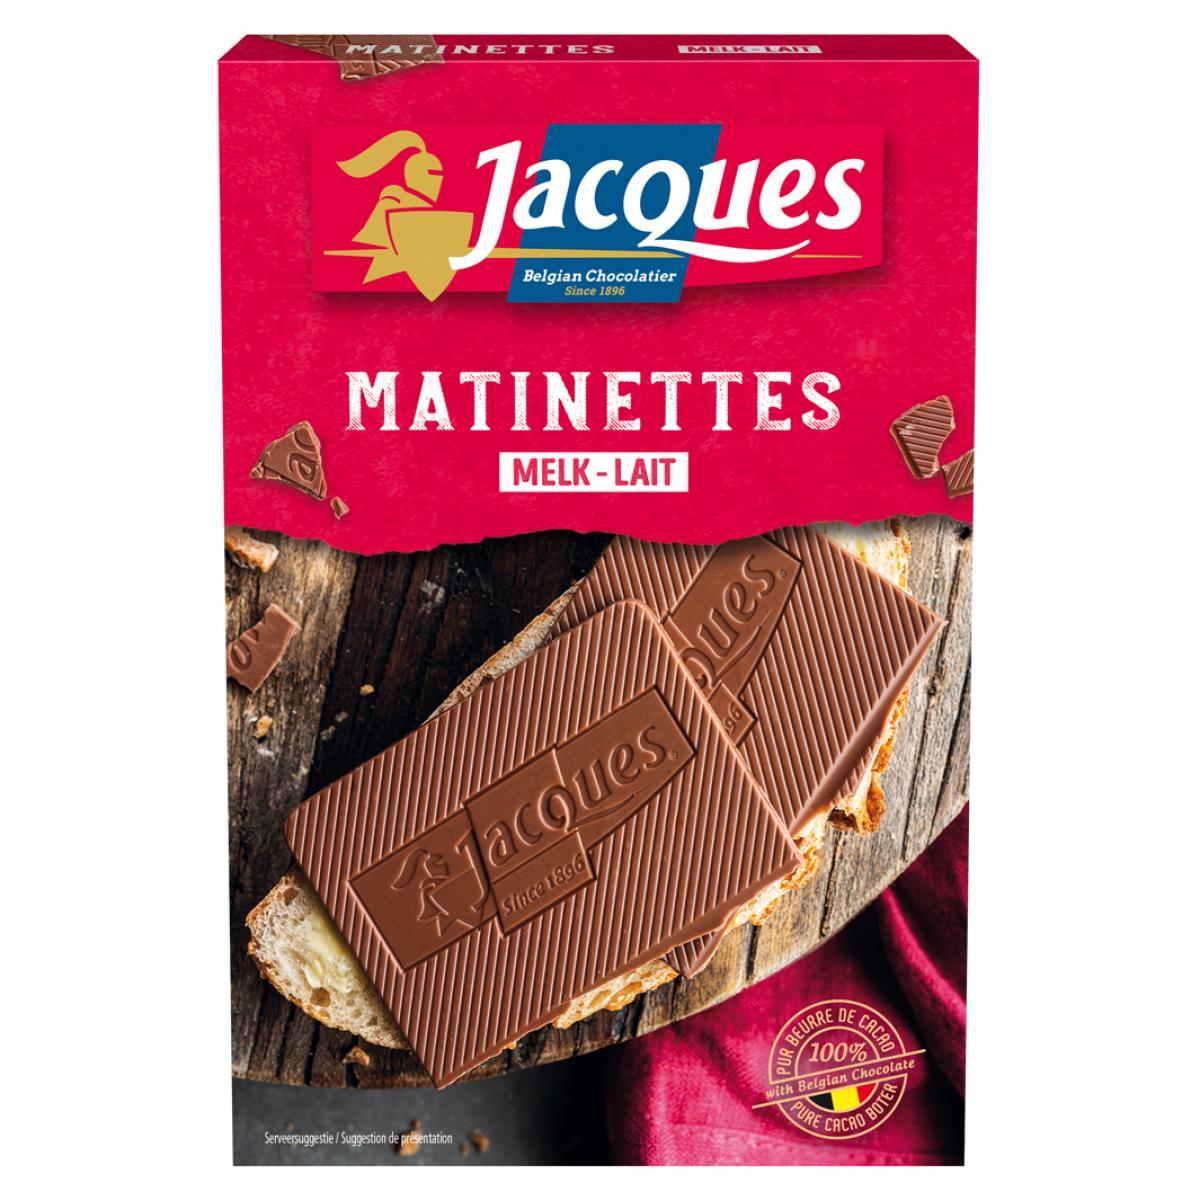 Matinettes in melkchocolade van Jacques